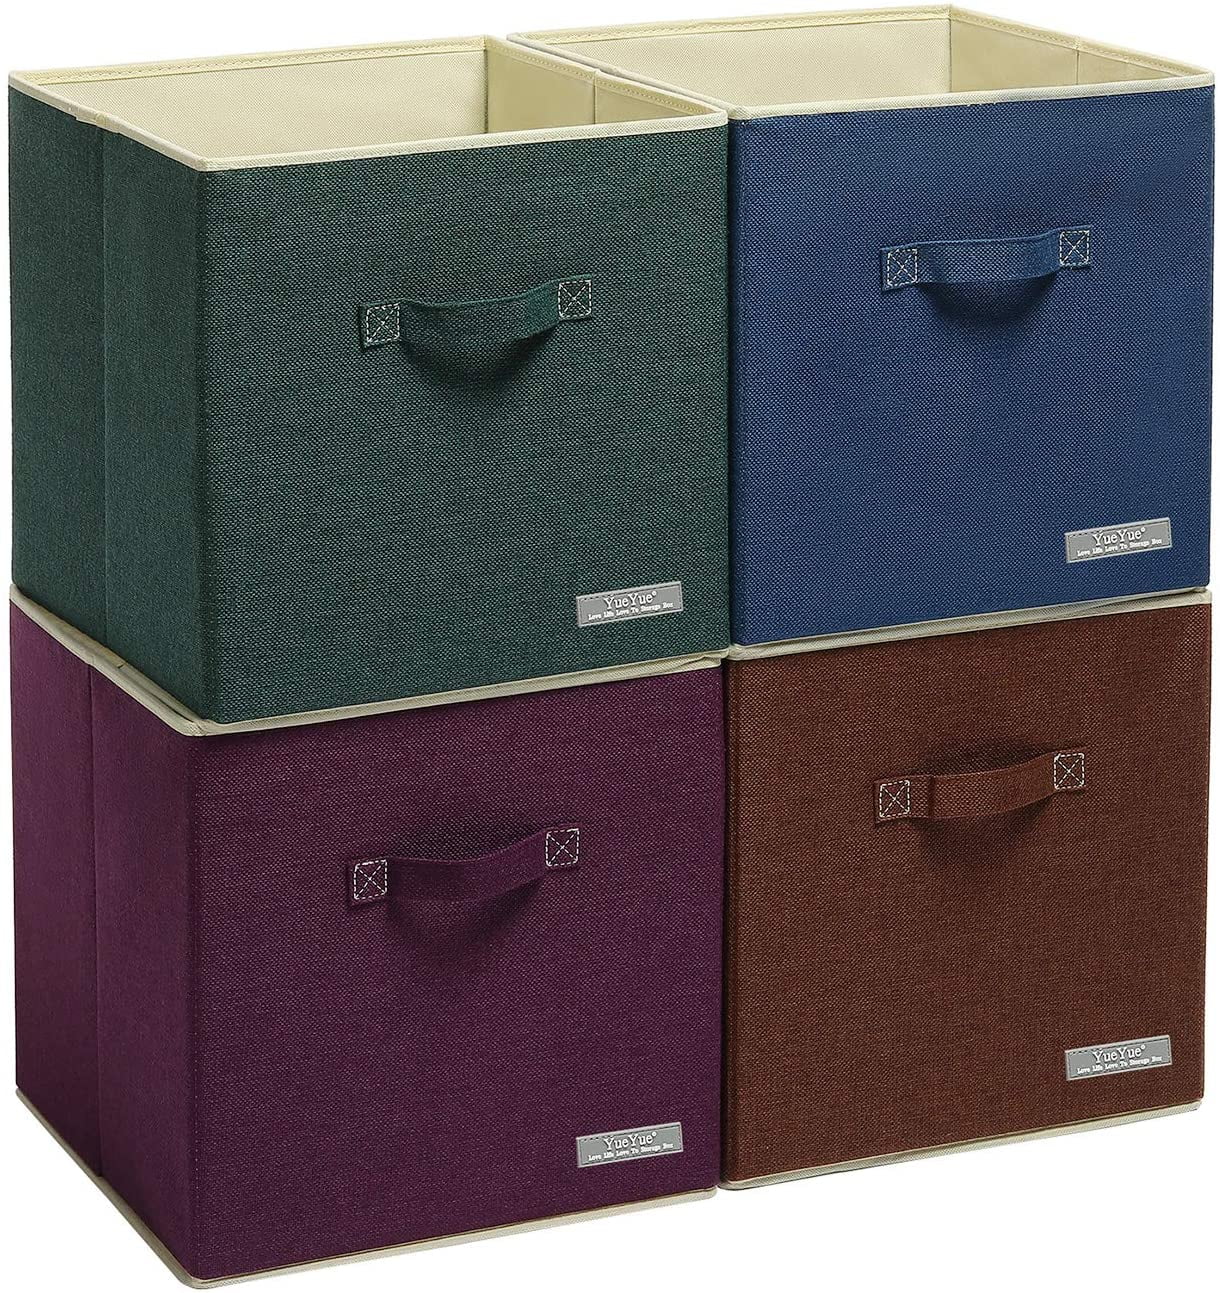 Fabric Foldable Closet Organizer Bins Storage Cube - 4 Pack 13 X 13 X ...